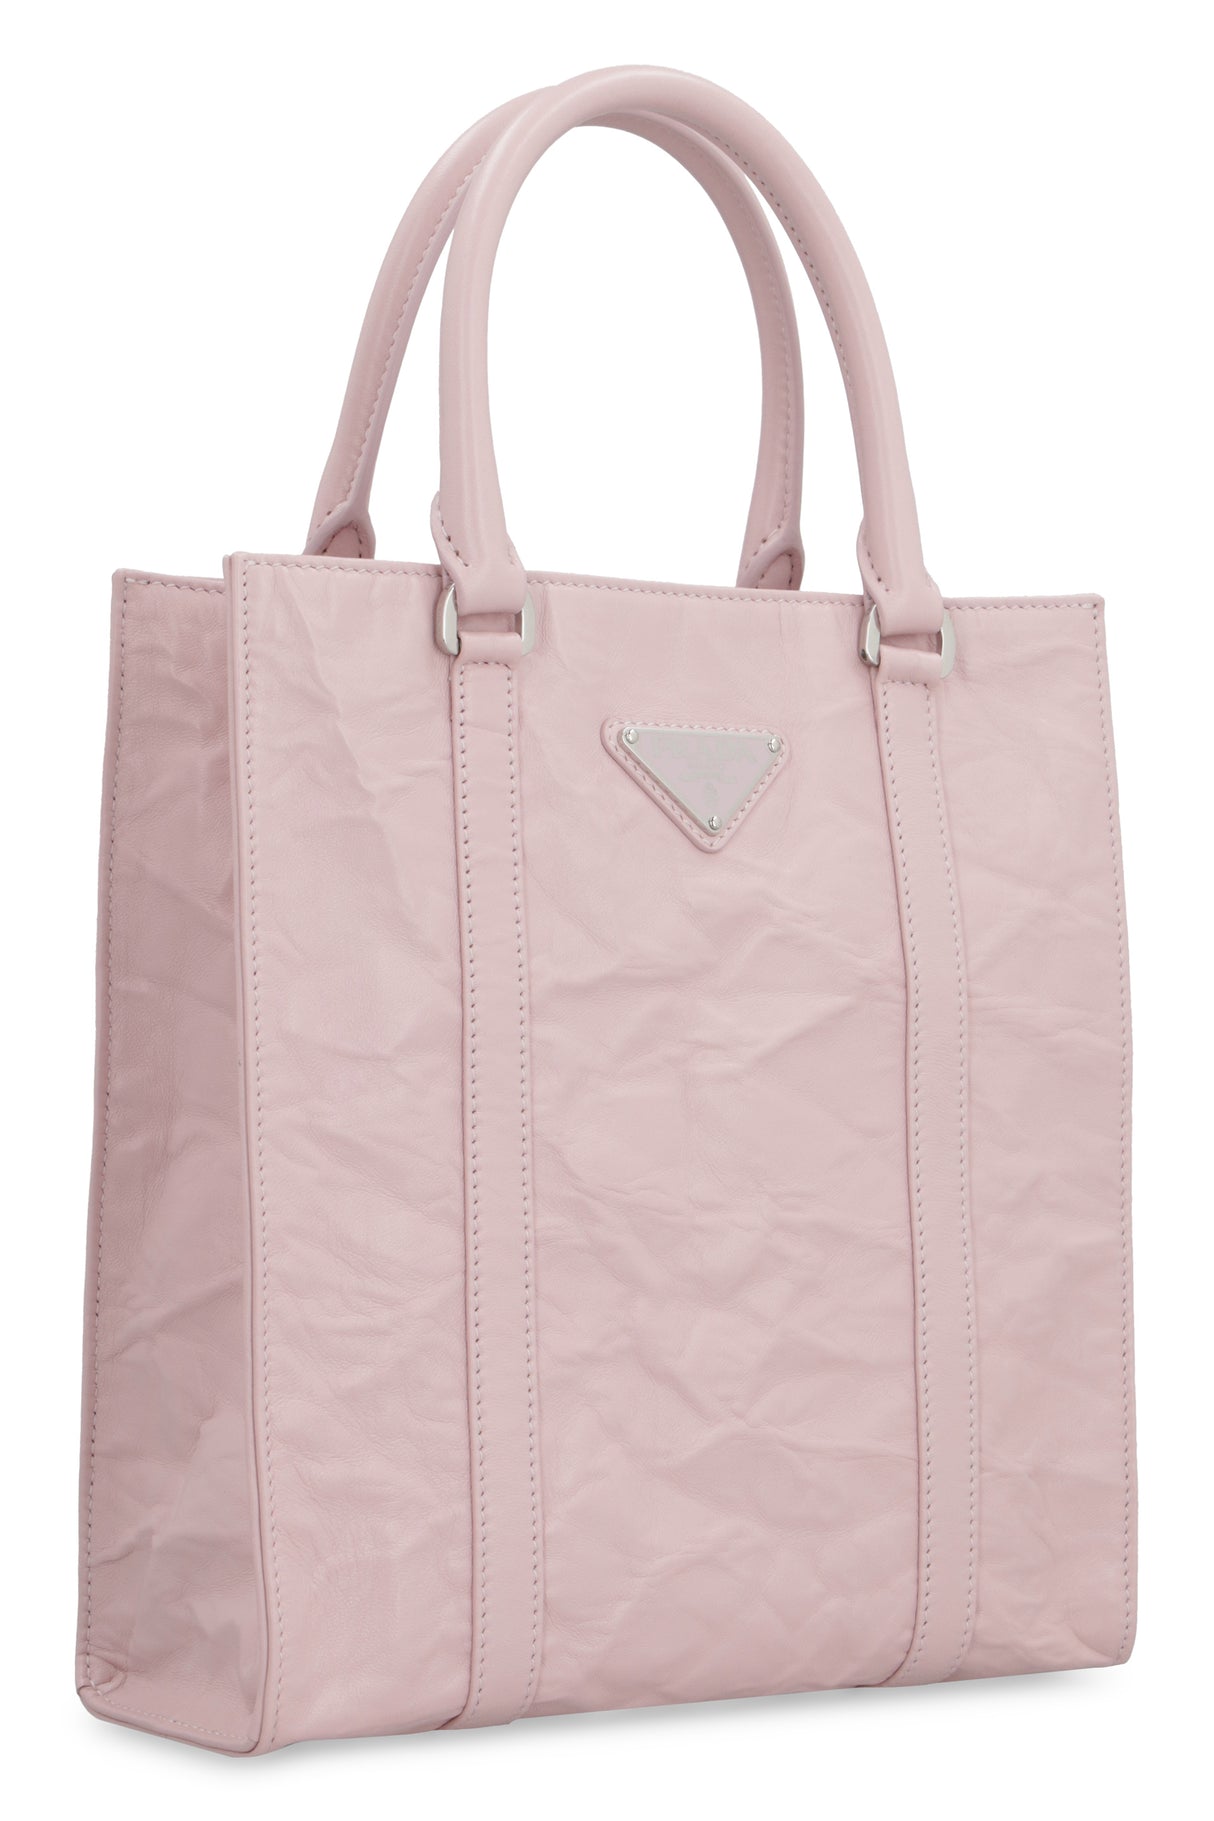 PRADA Pink Wrinkled Leather Tote Handbag for Women